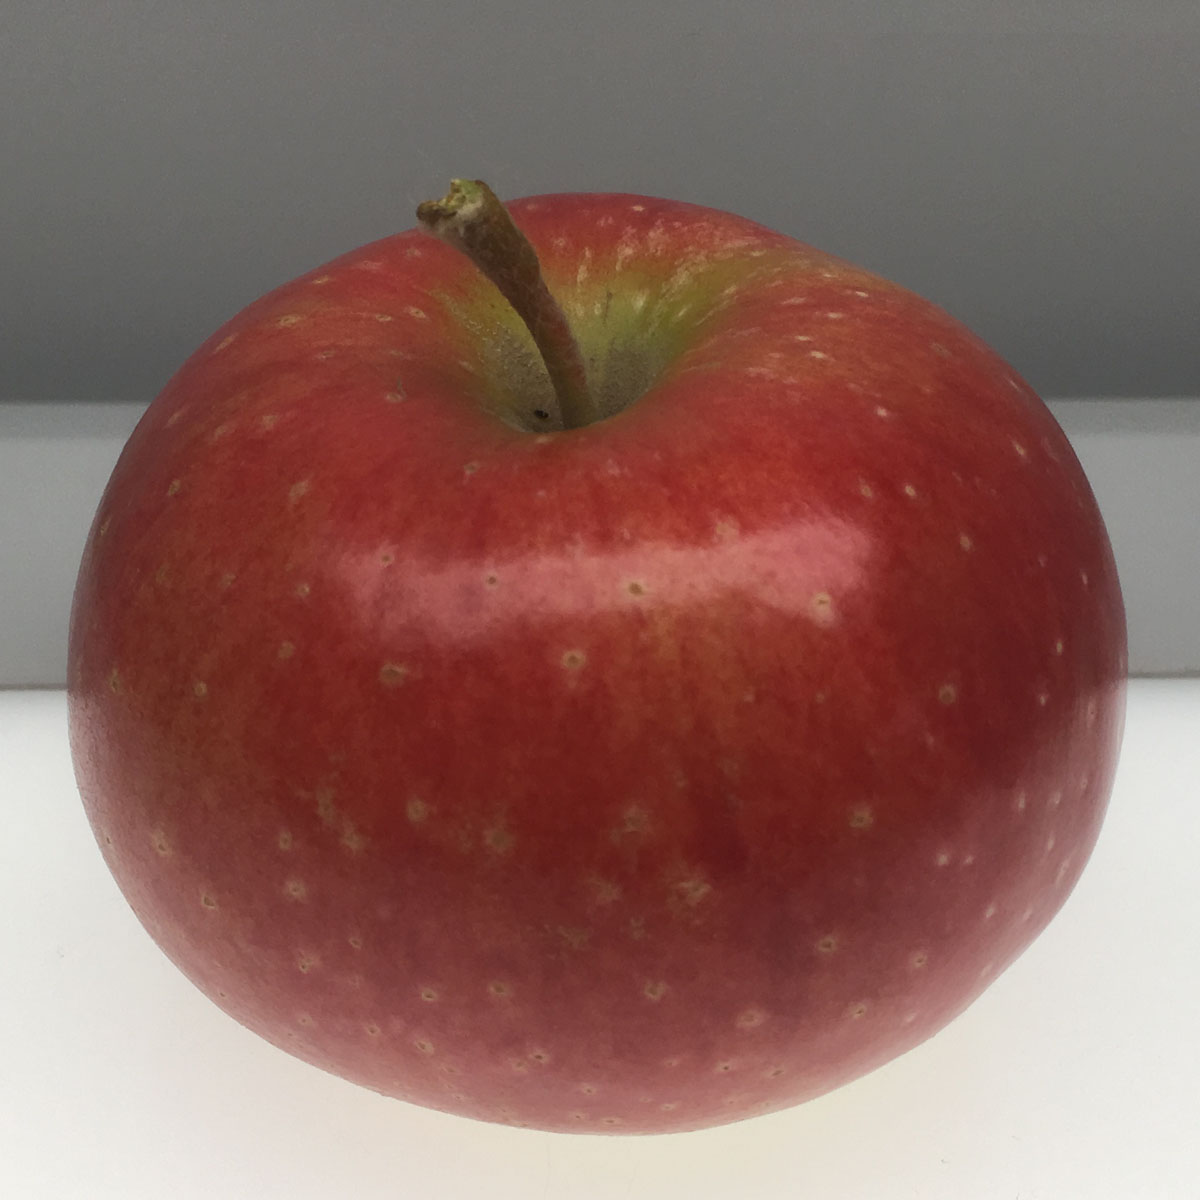 Smokehouse apple